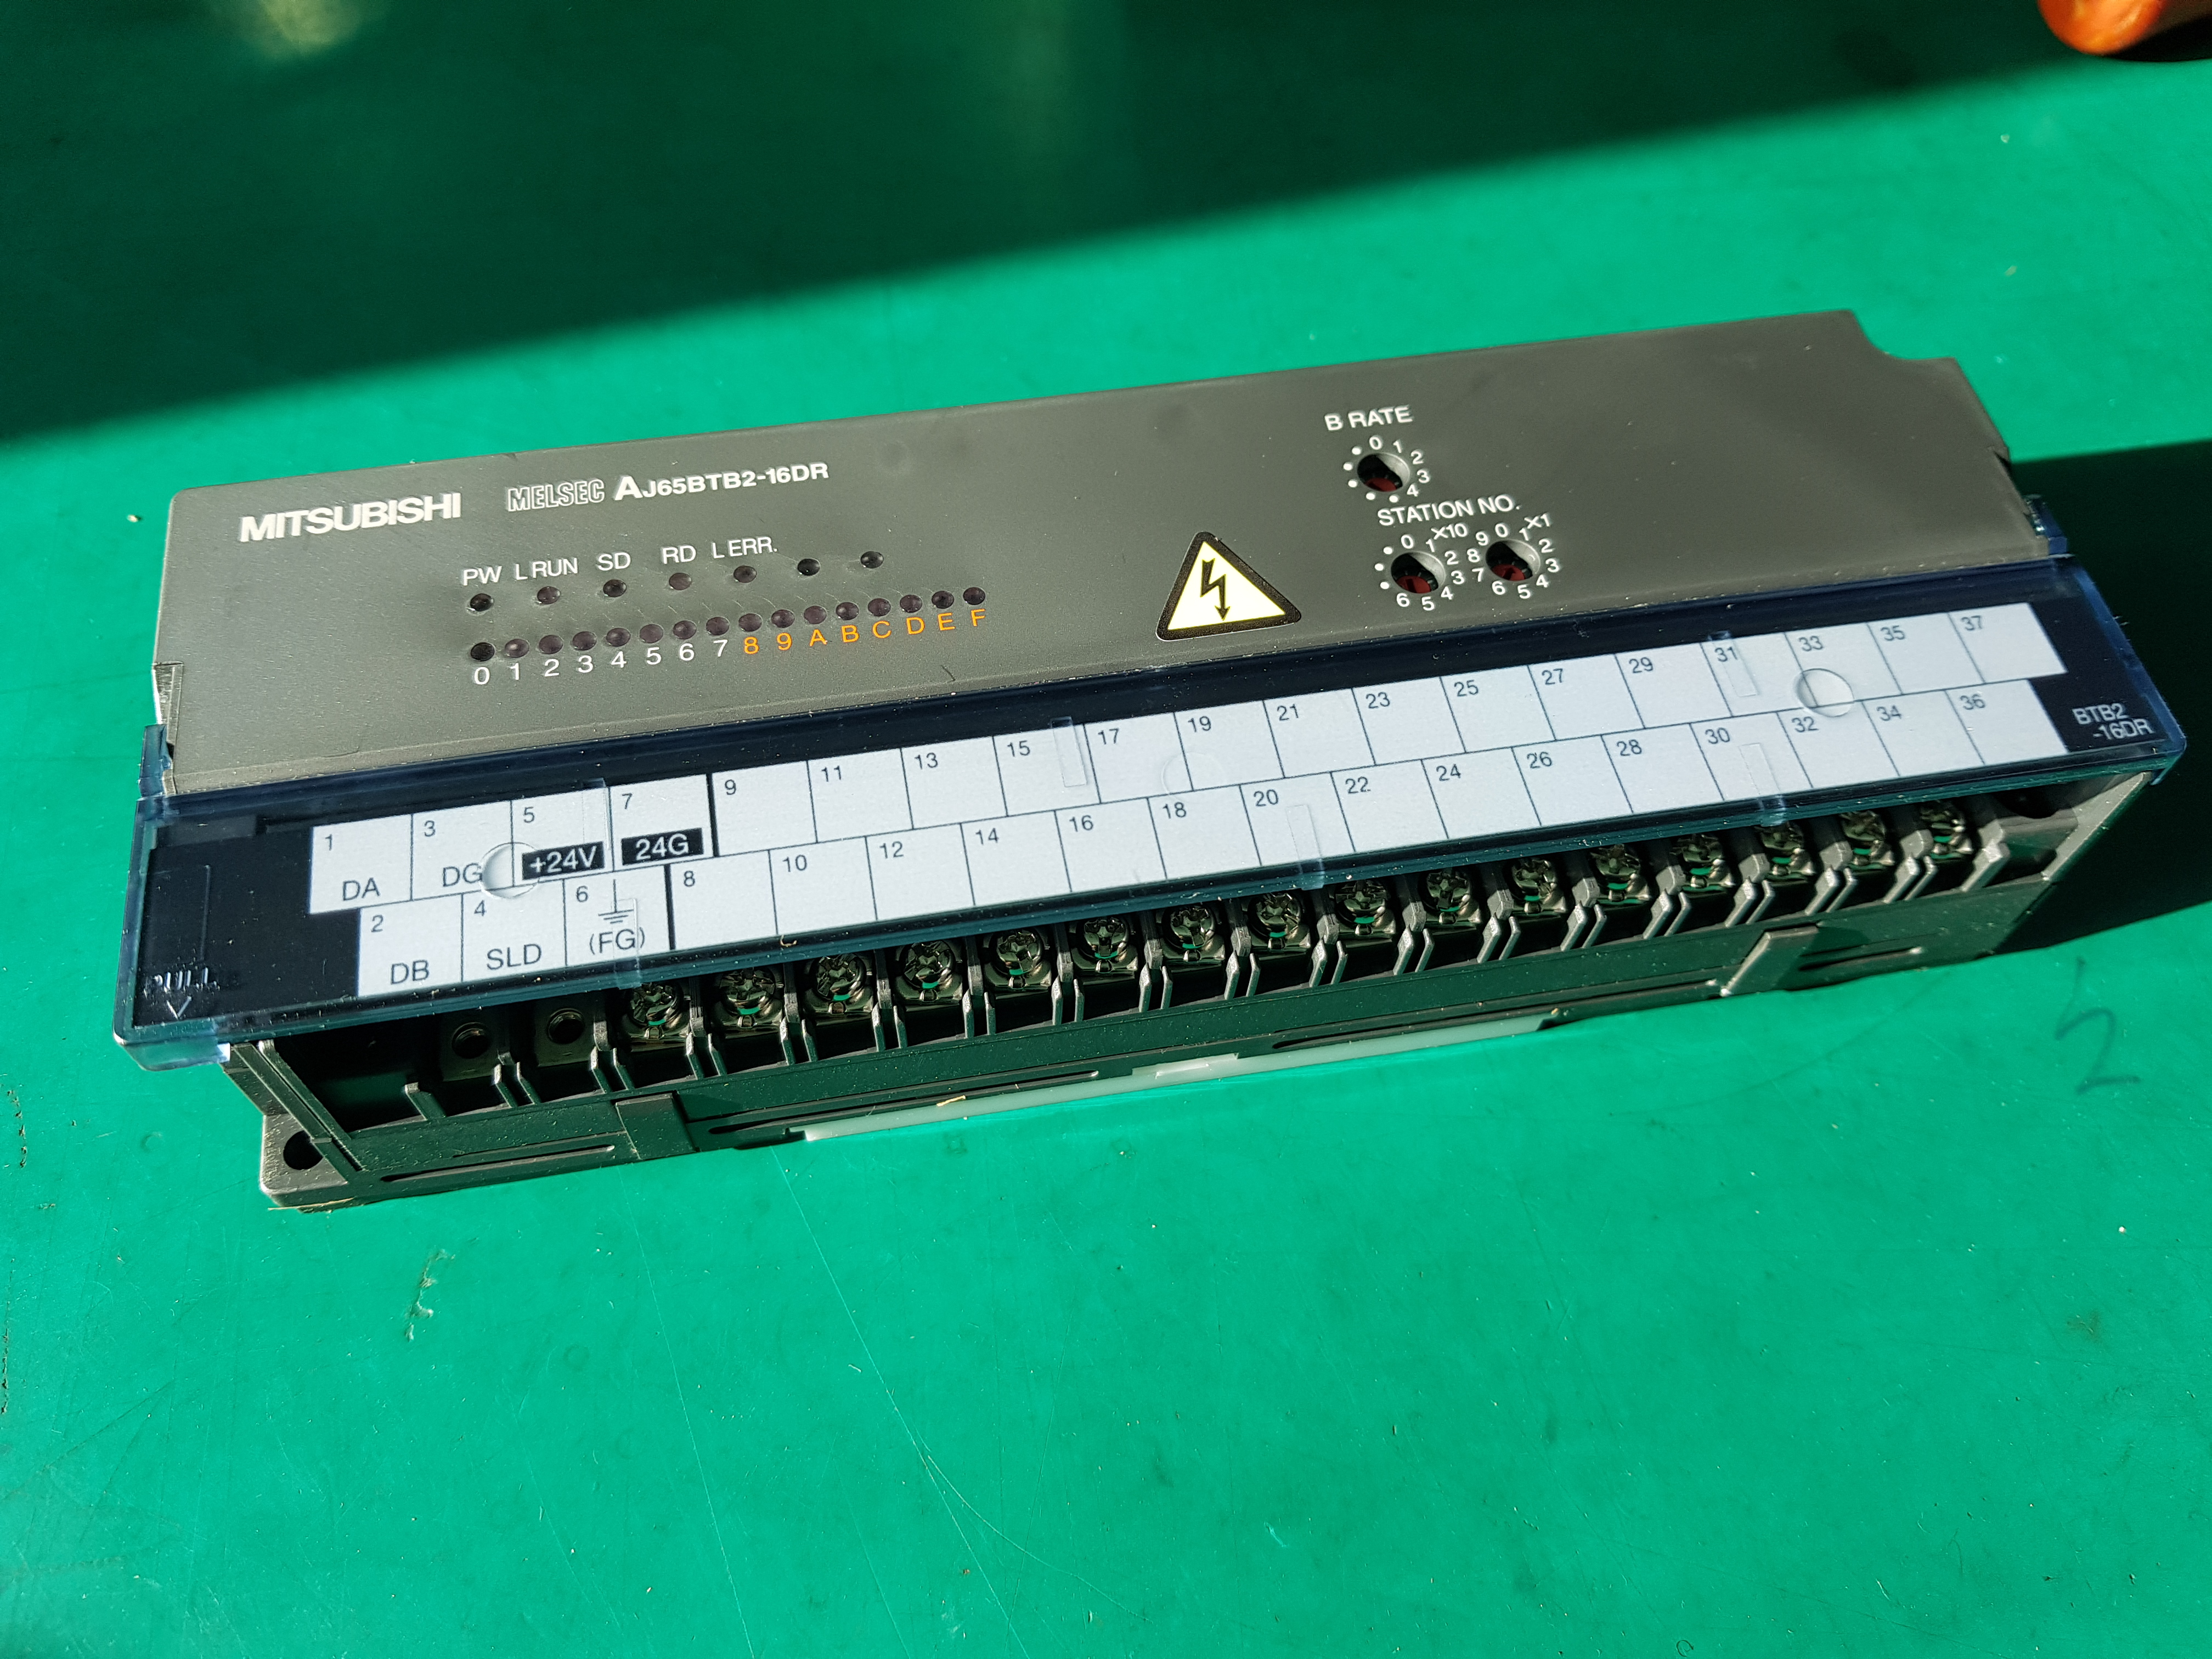 CC-LINK AJ65BTB2-16DR(미사용품)